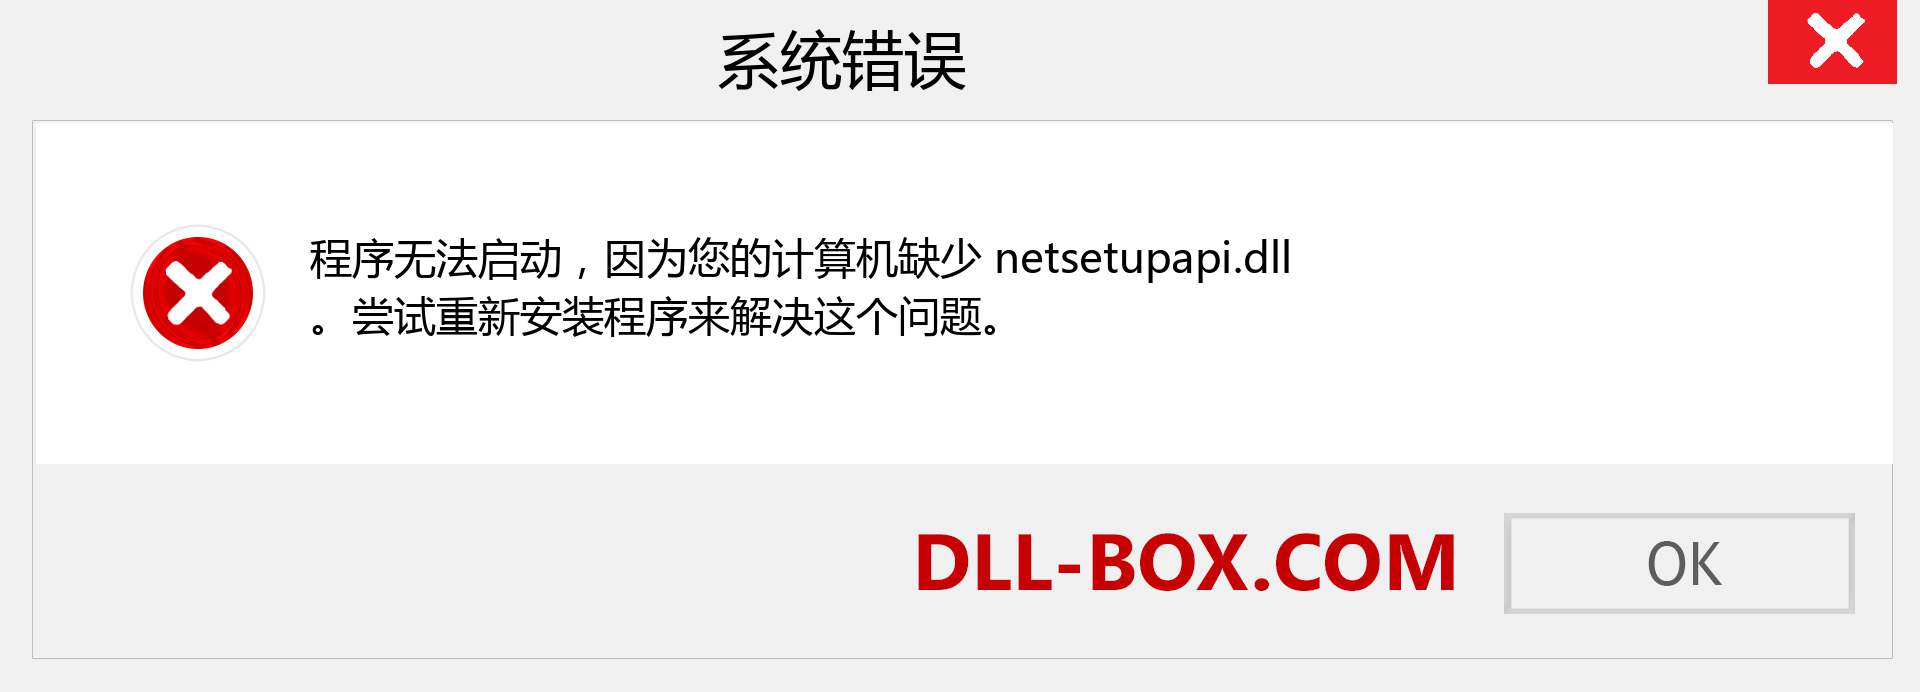 netsetupapi.dll 文件丢失？。 适用于 Windows 7、8、10 的下载 - 修复 Windows、照片、图像上的 netsetupapi dll 丢失错误